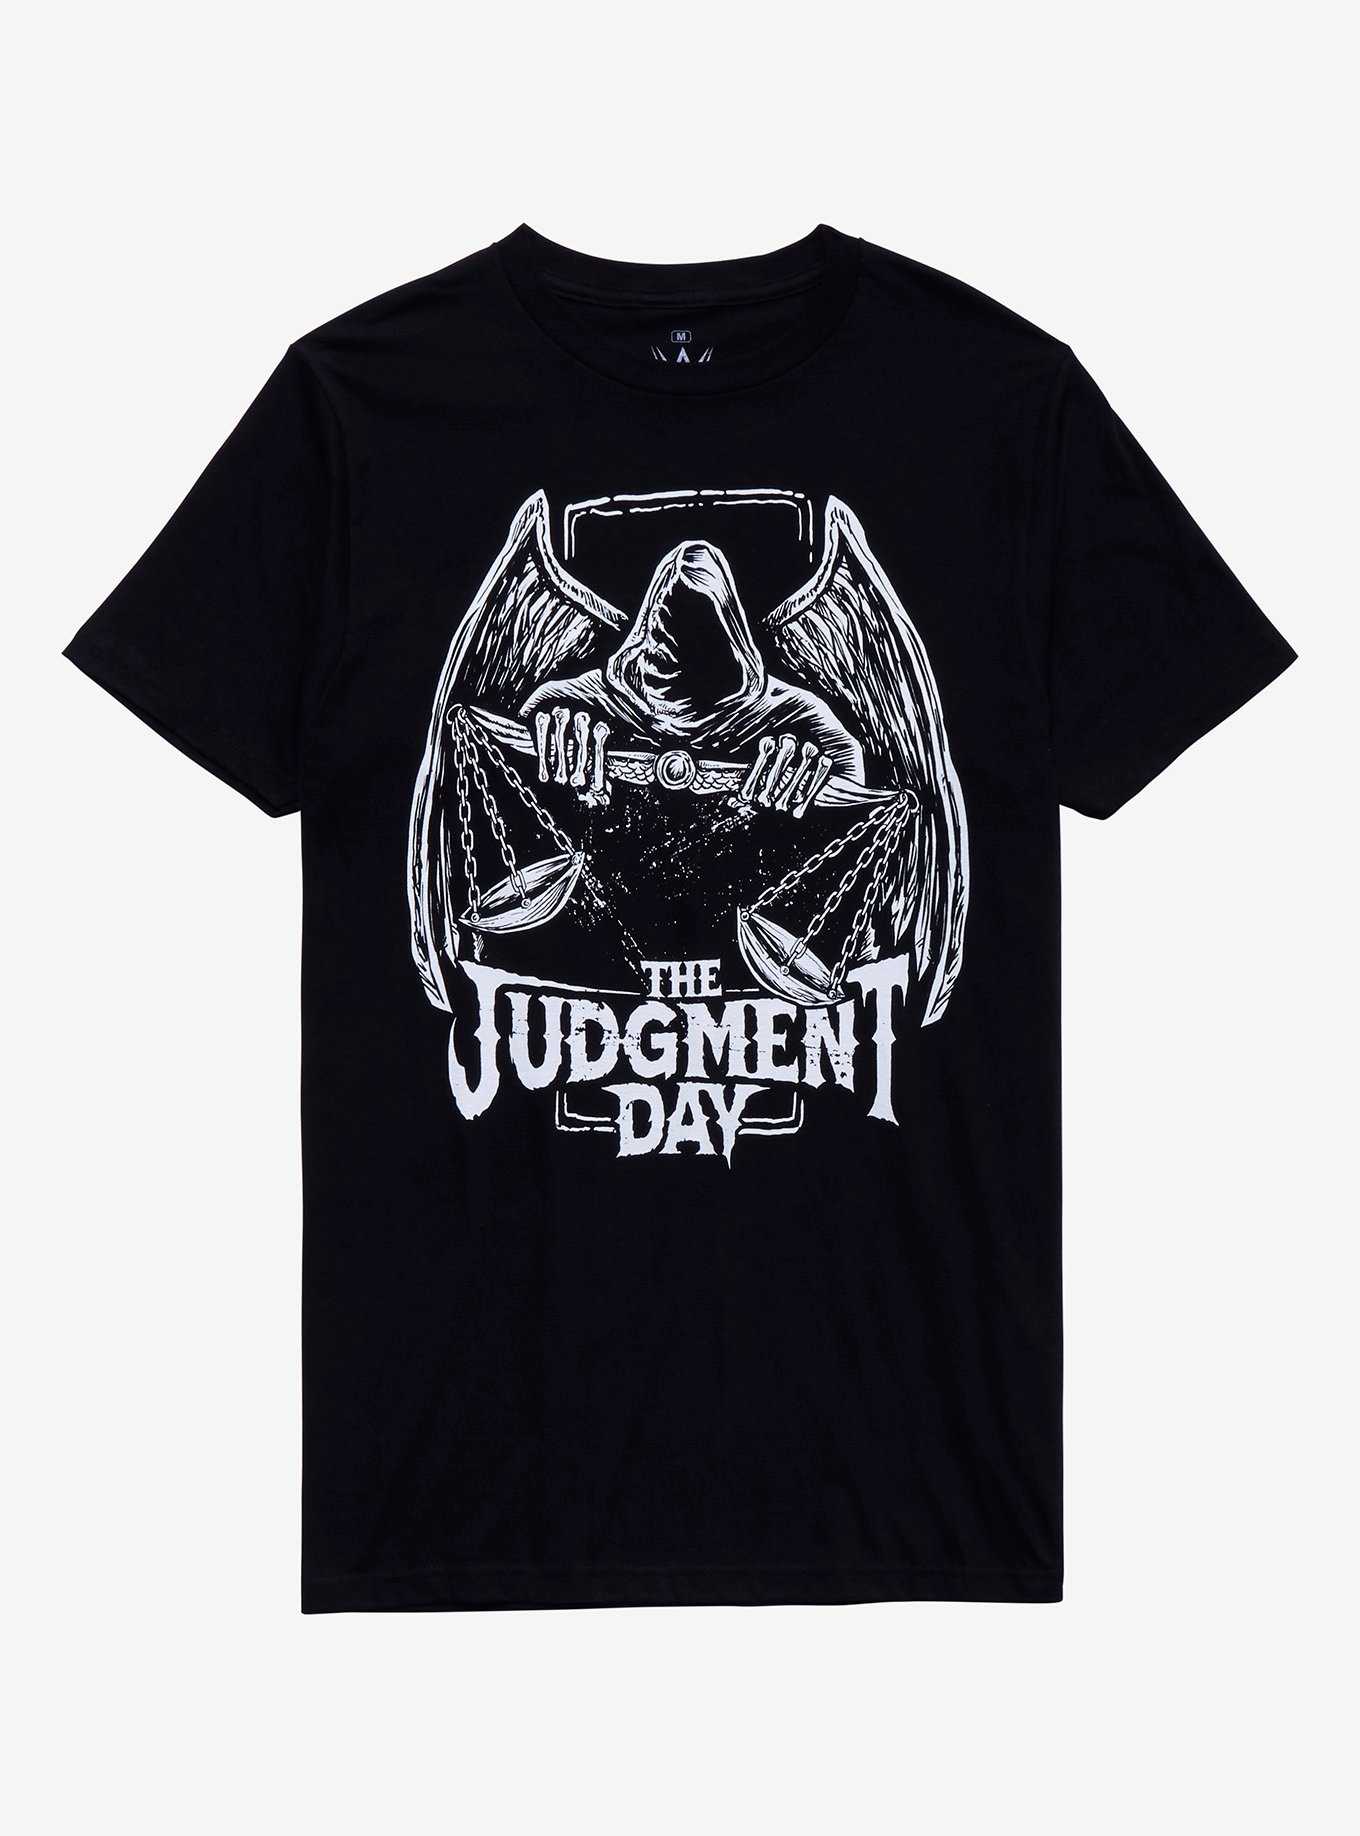 WWE Judgement Day T-Shirt, , hi-res